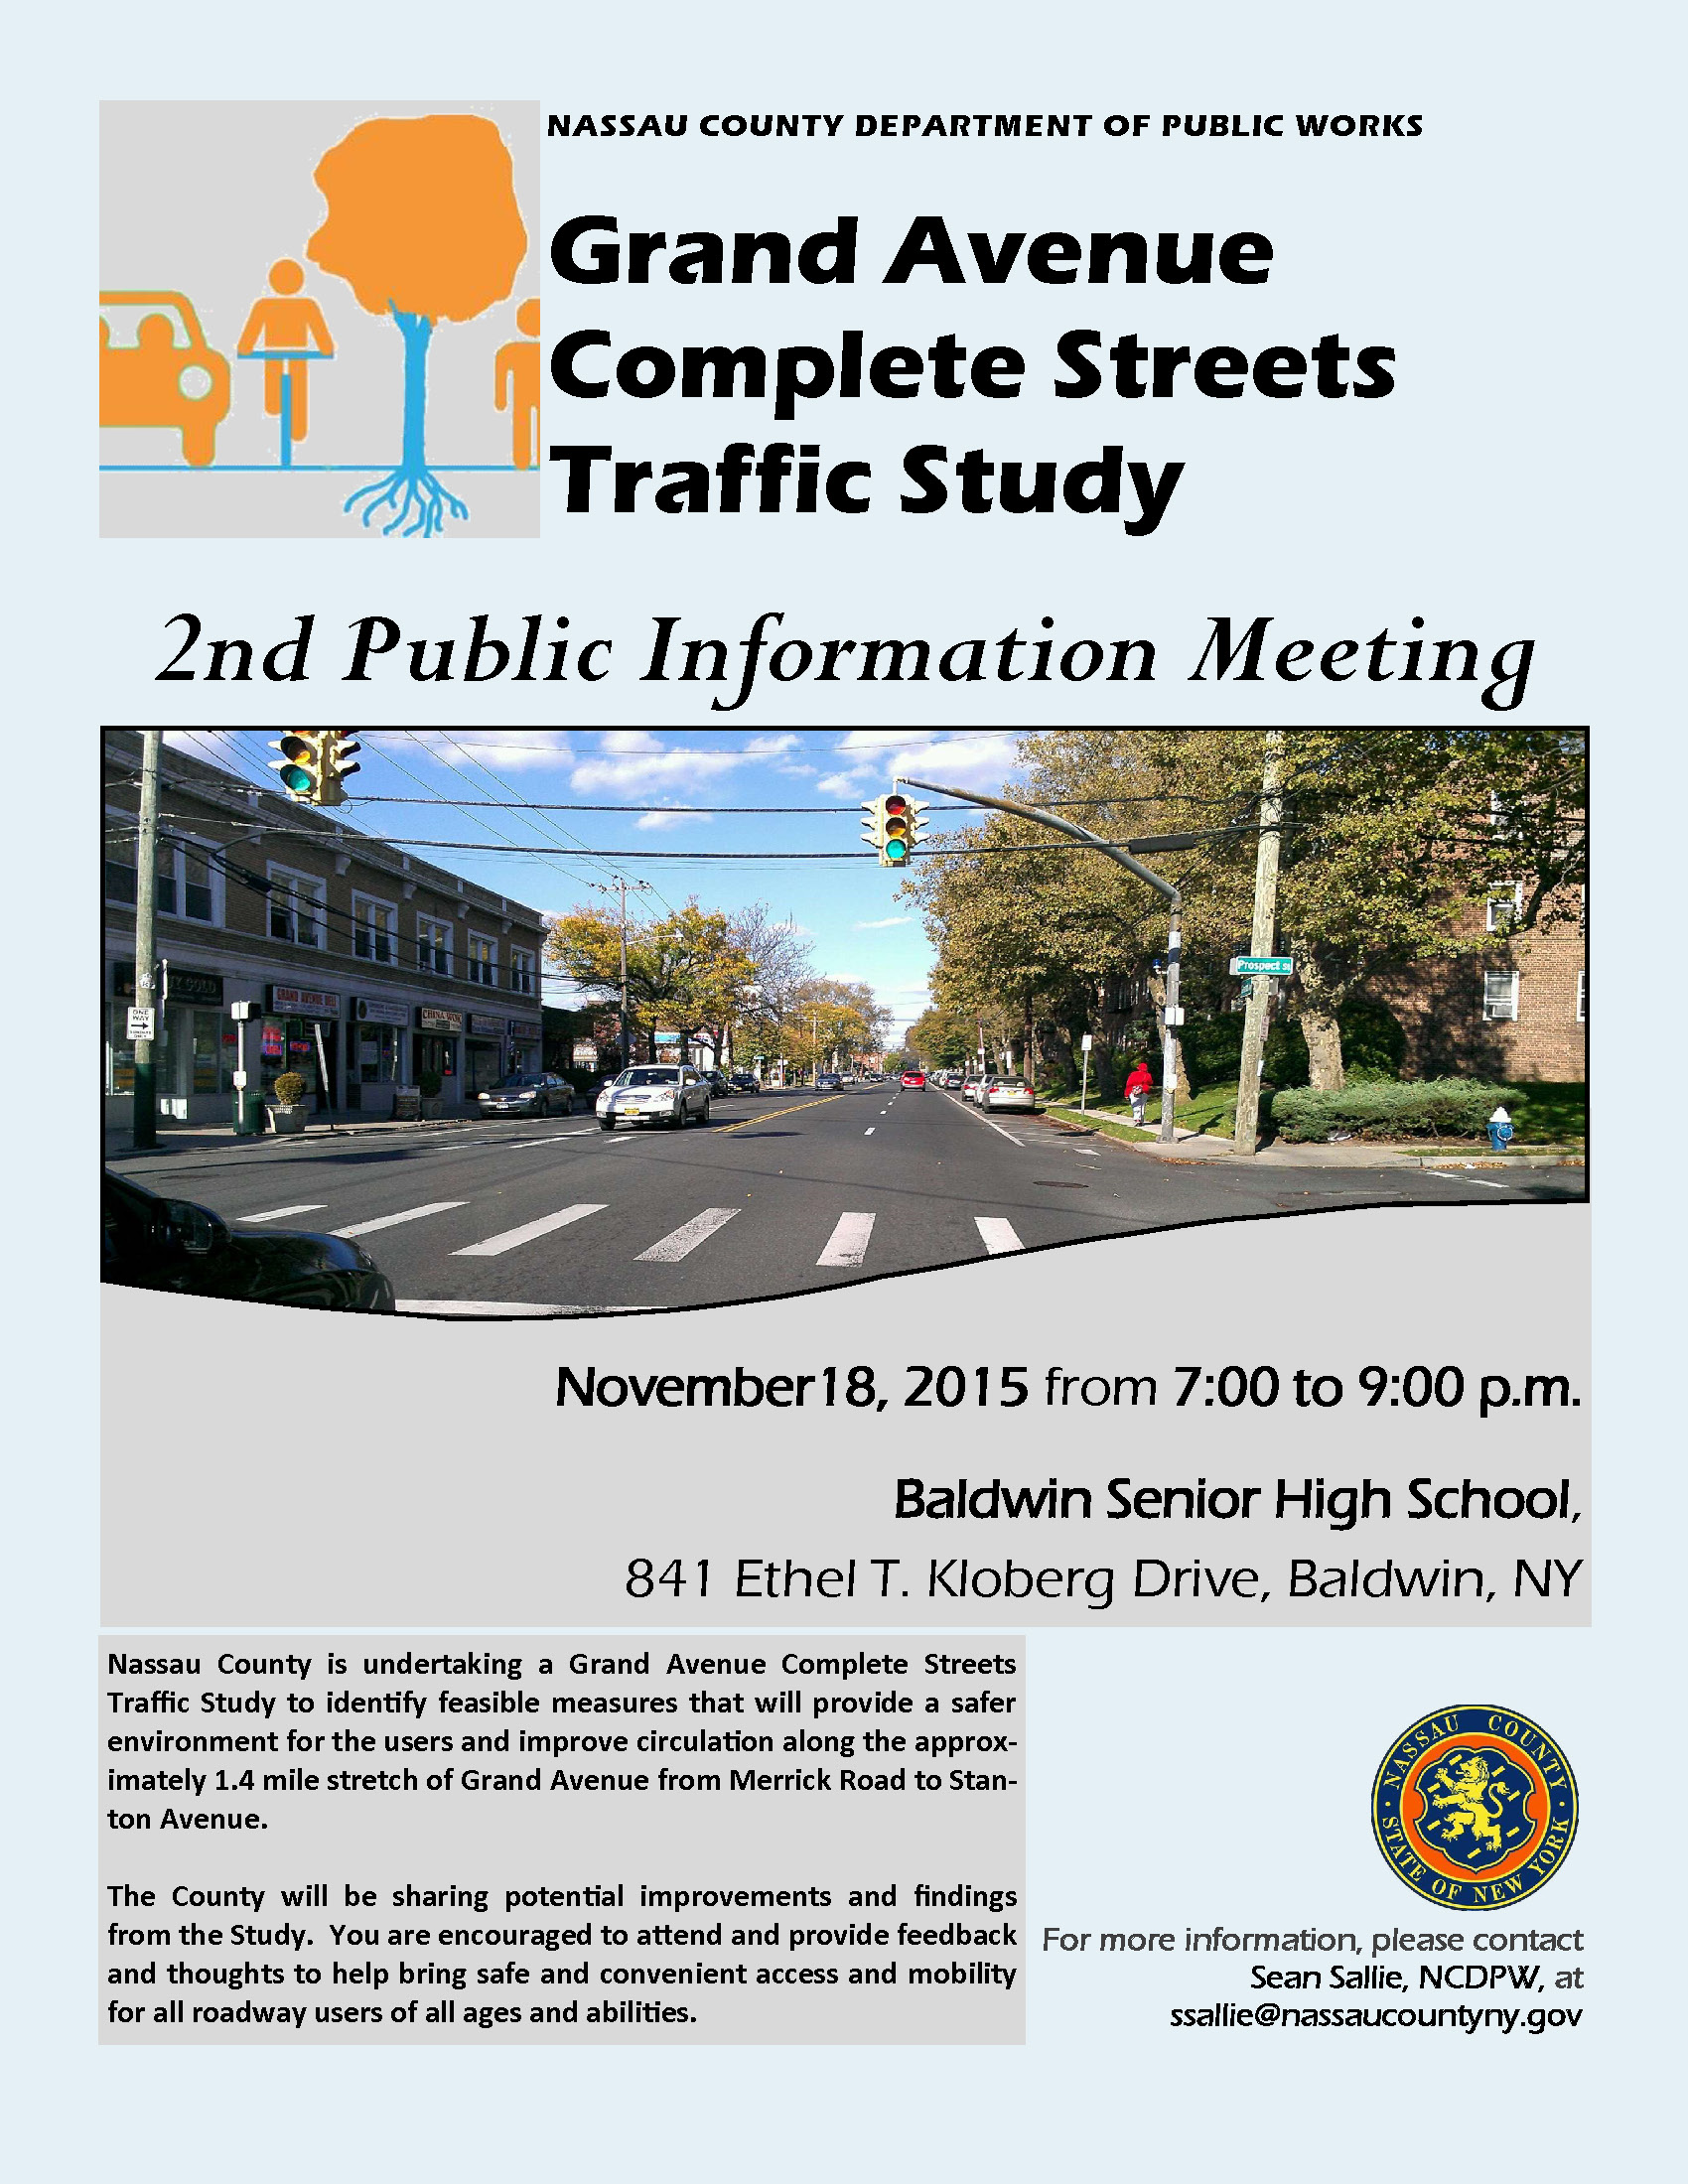 JPEG of Grand Ave 2nd Public Meeting Flyer 11-18-15.jpg